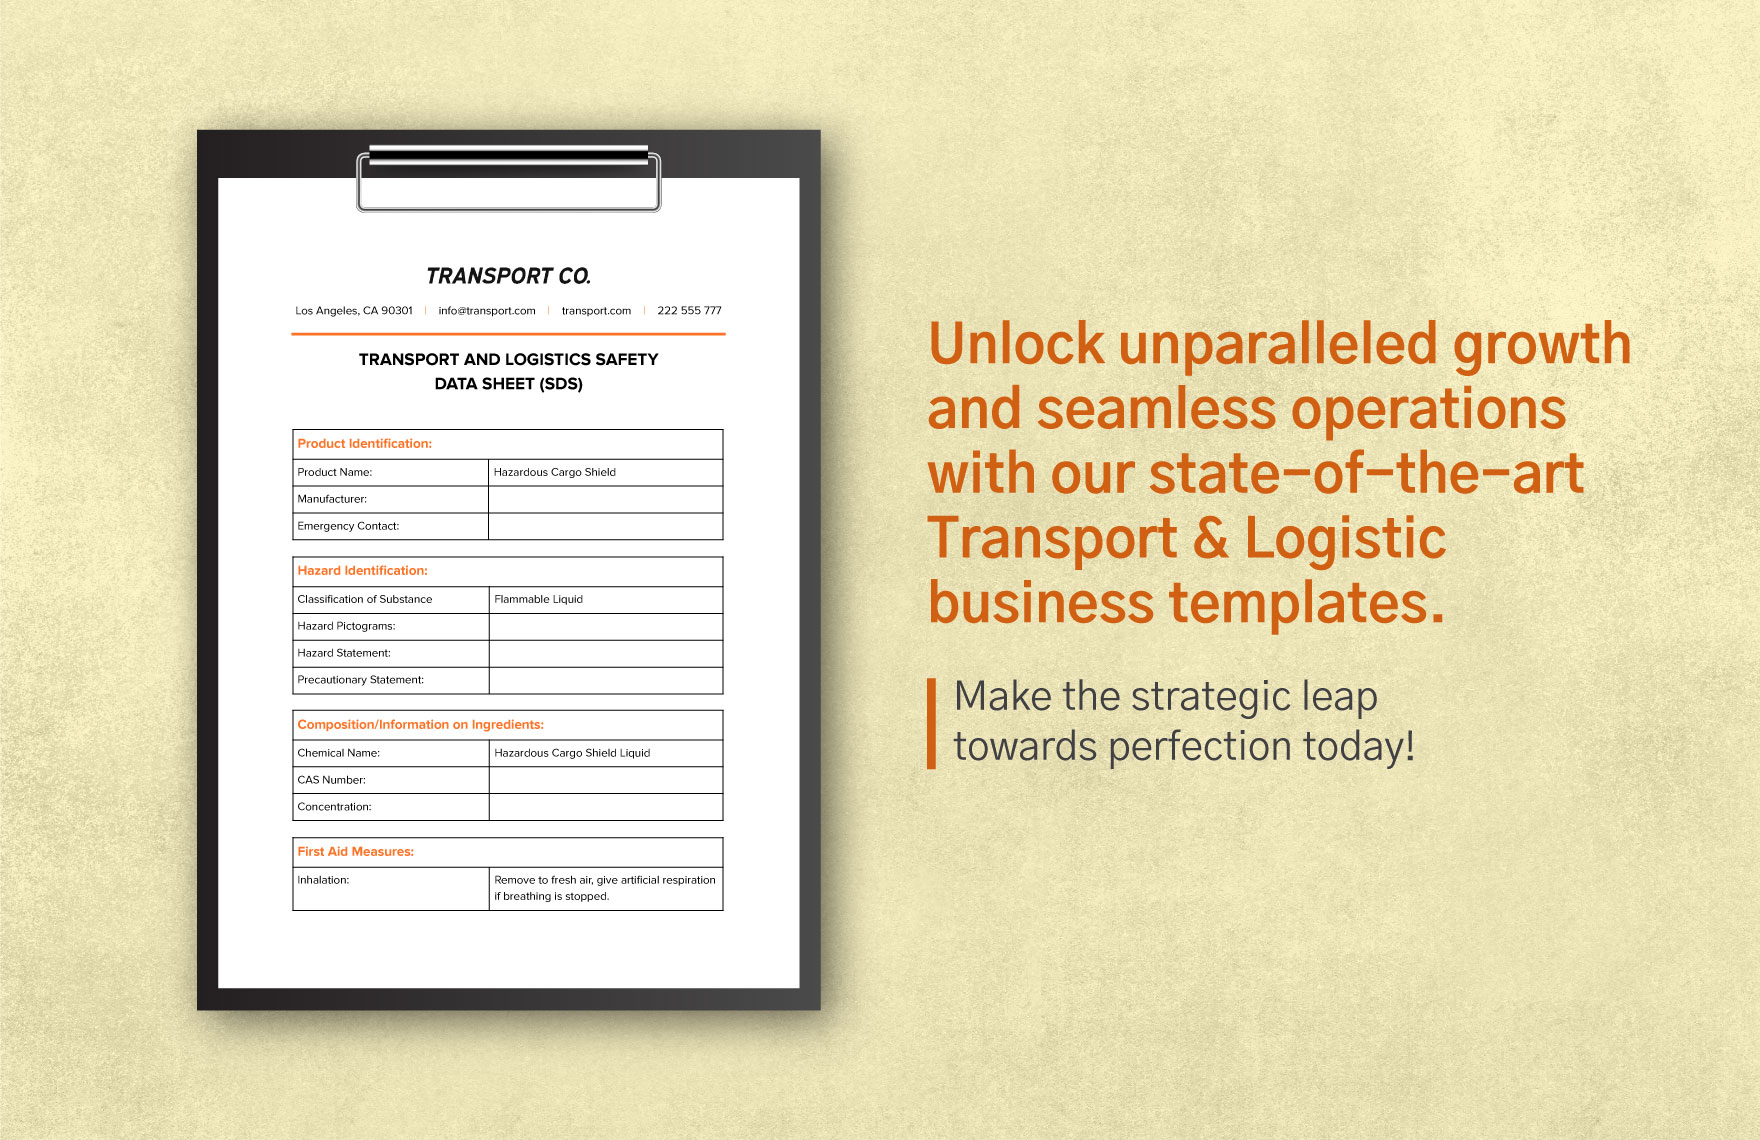 Transport and Logistics Safety Data Sheet (SDS) Template